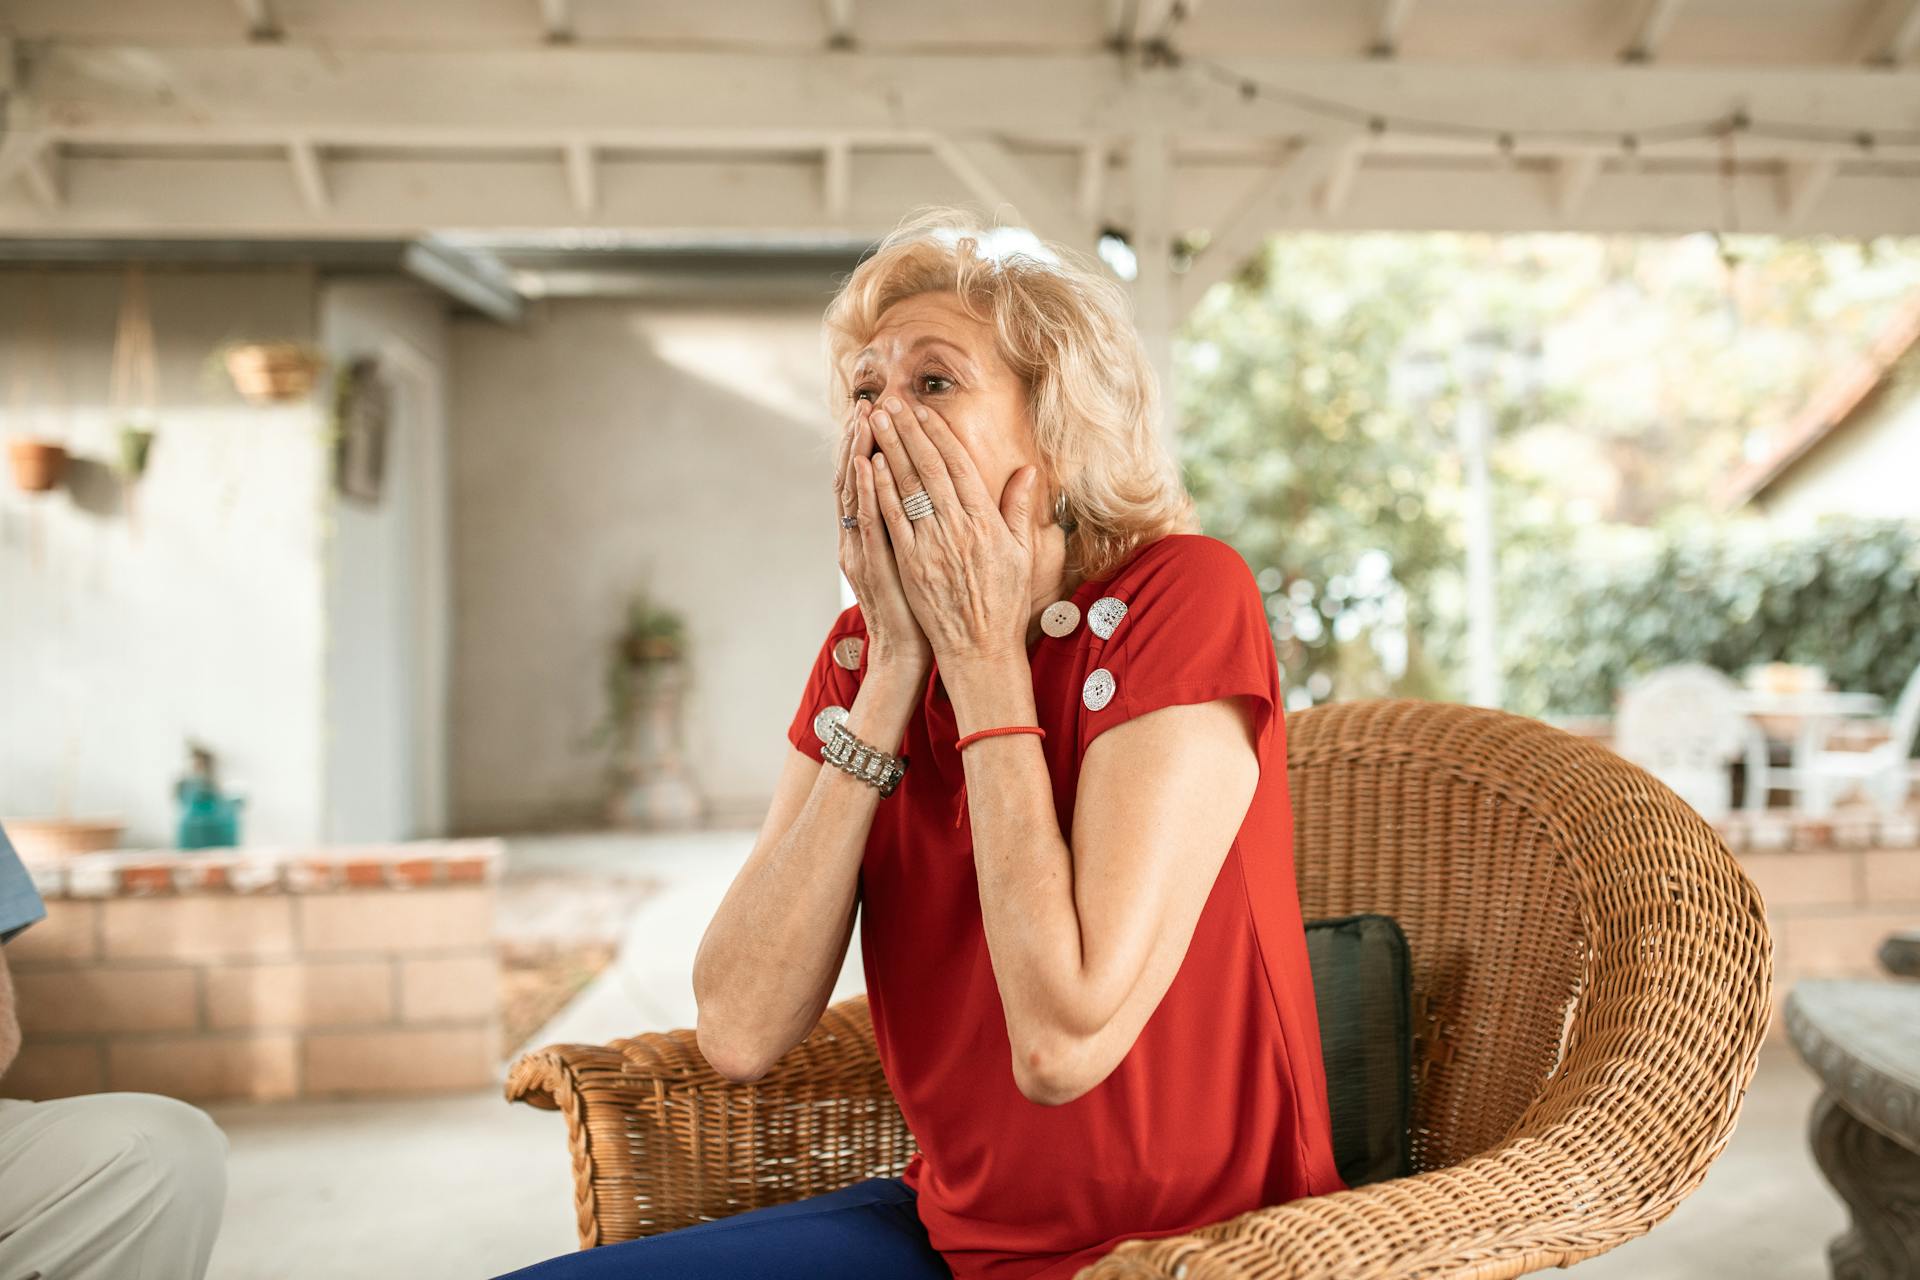 A shocked older woman | Source: Pexels